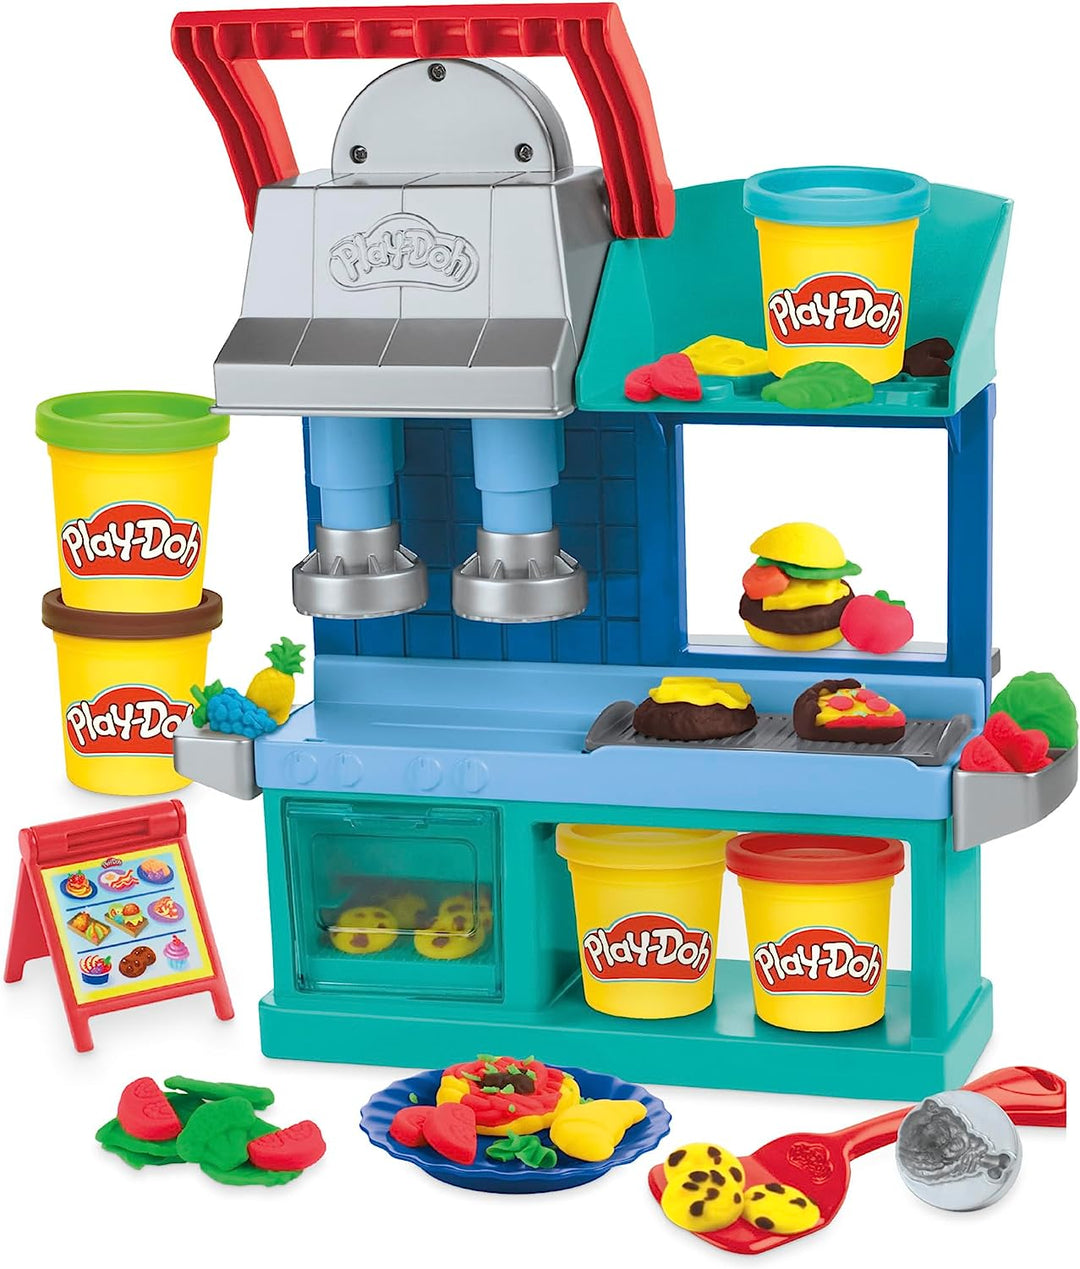 Play-Doh Restaurant Play Set